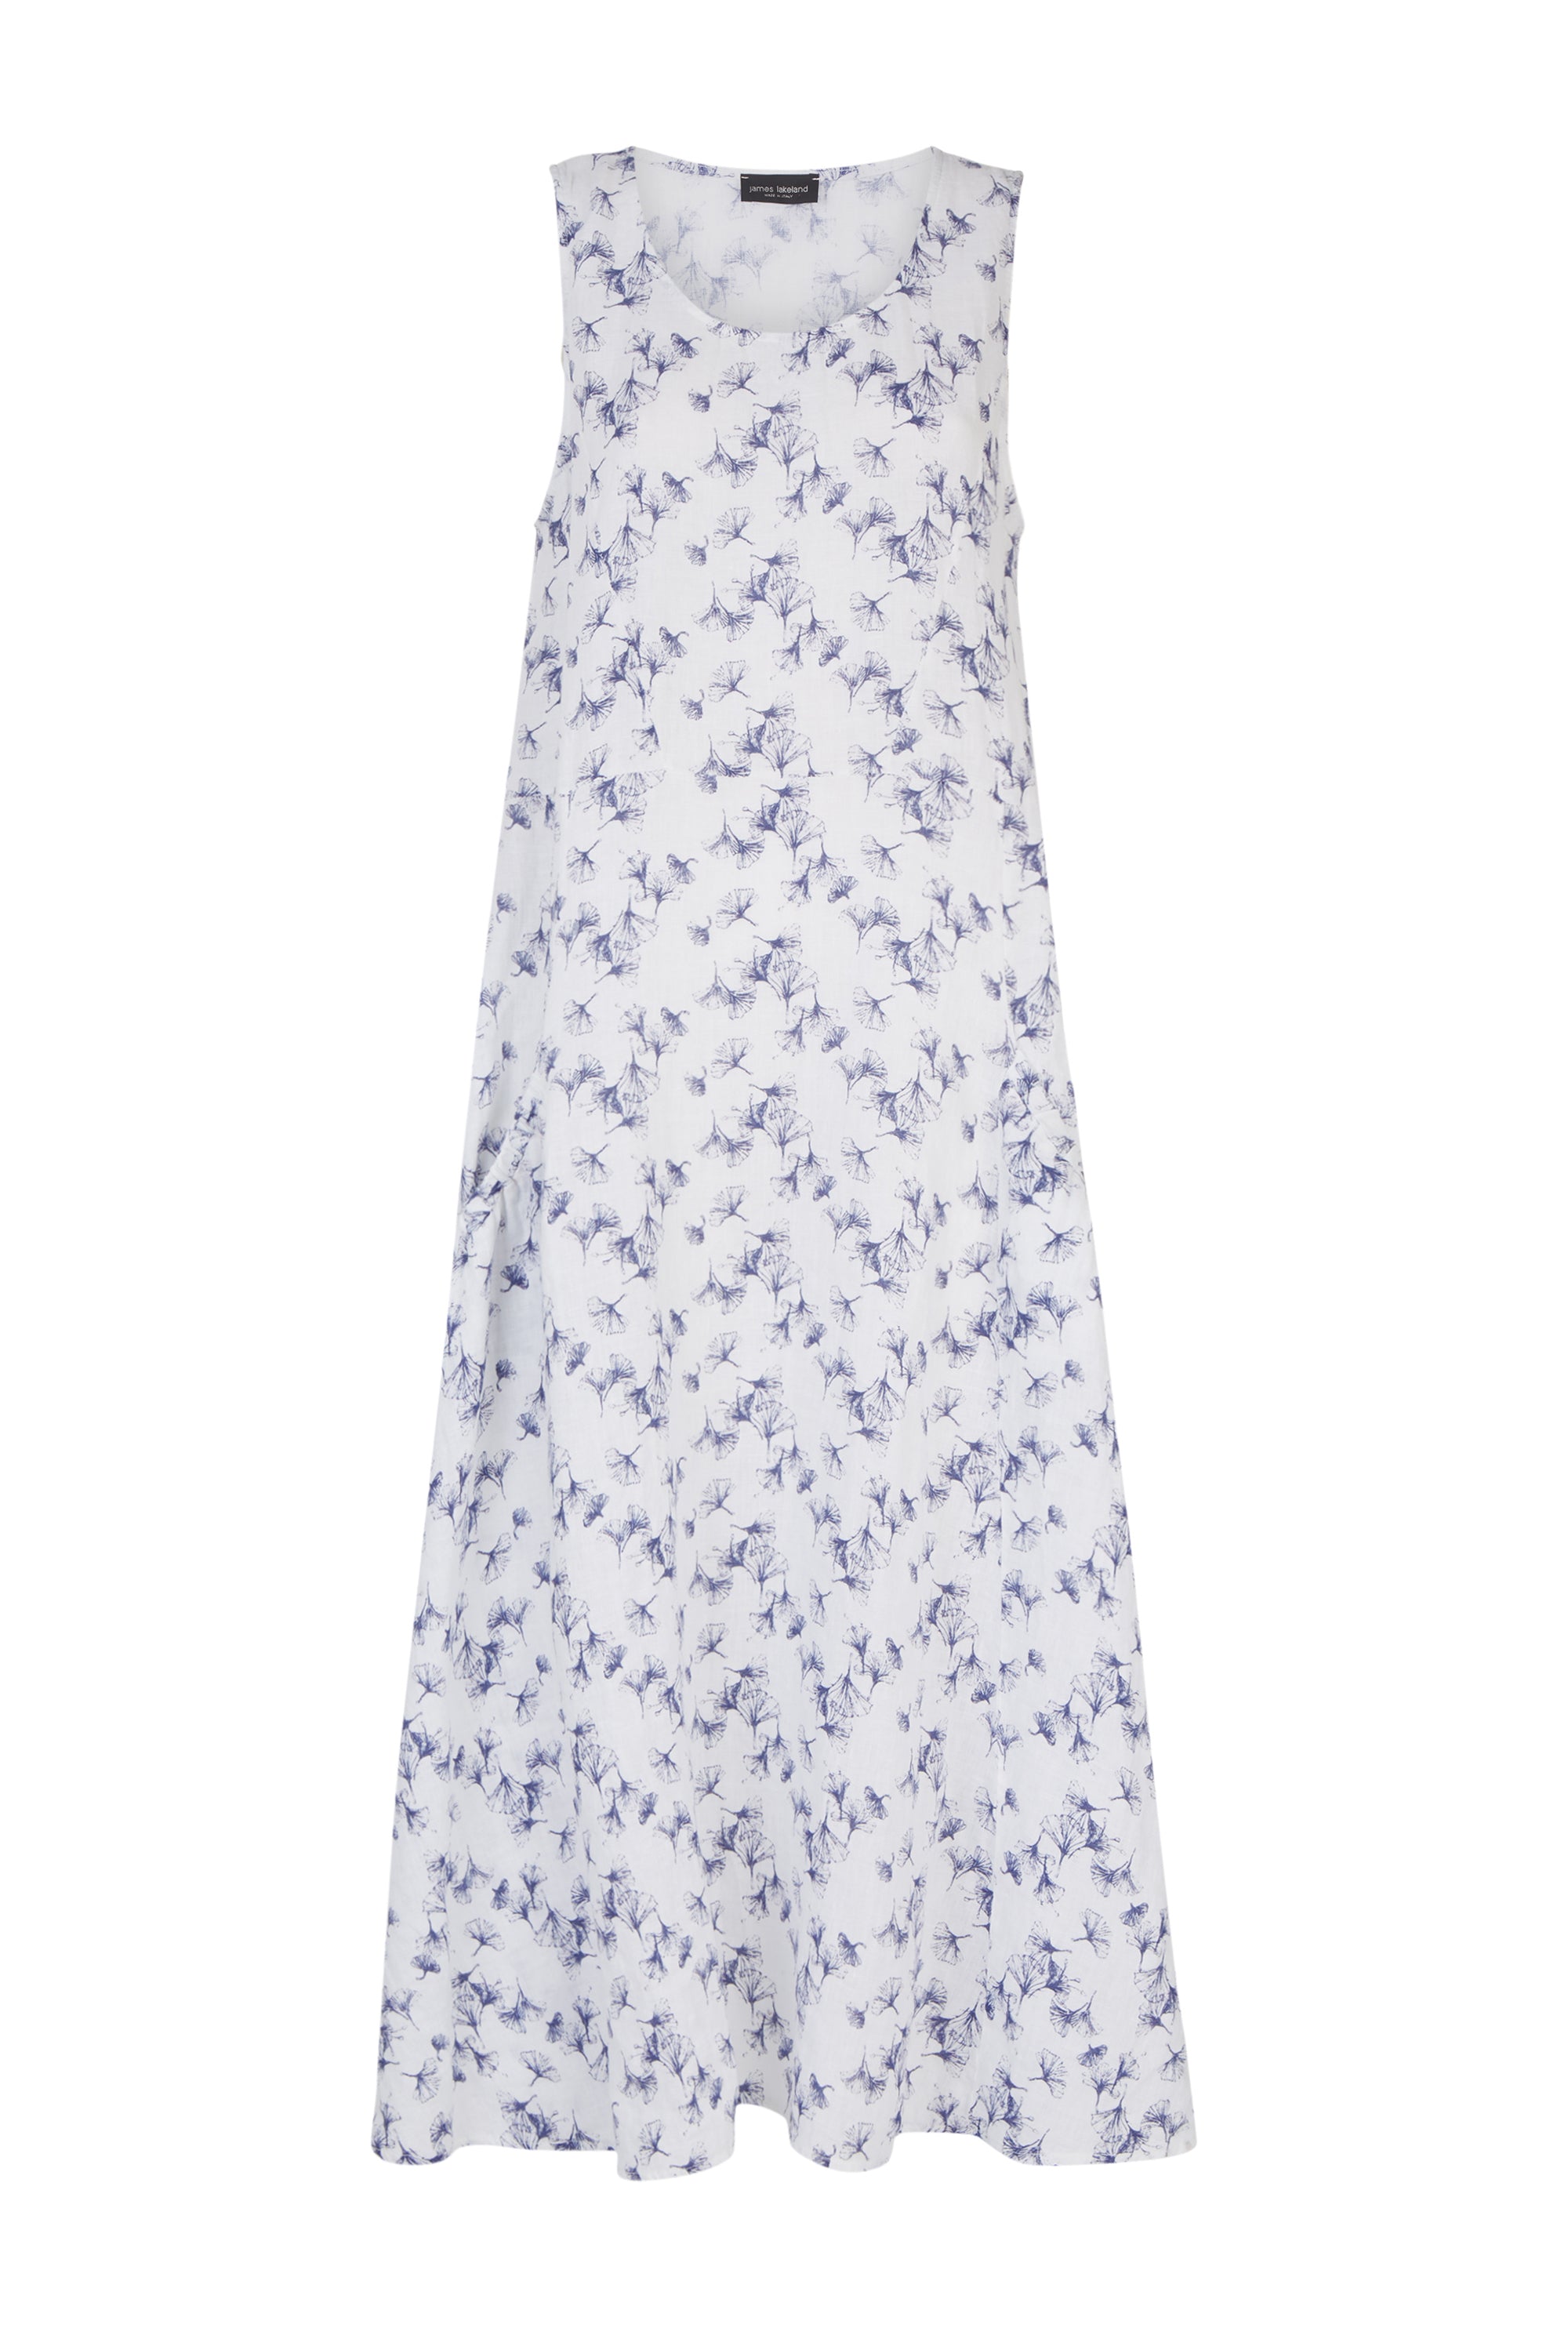 James Lakeland Women's Maxi Linen Print Dress - White